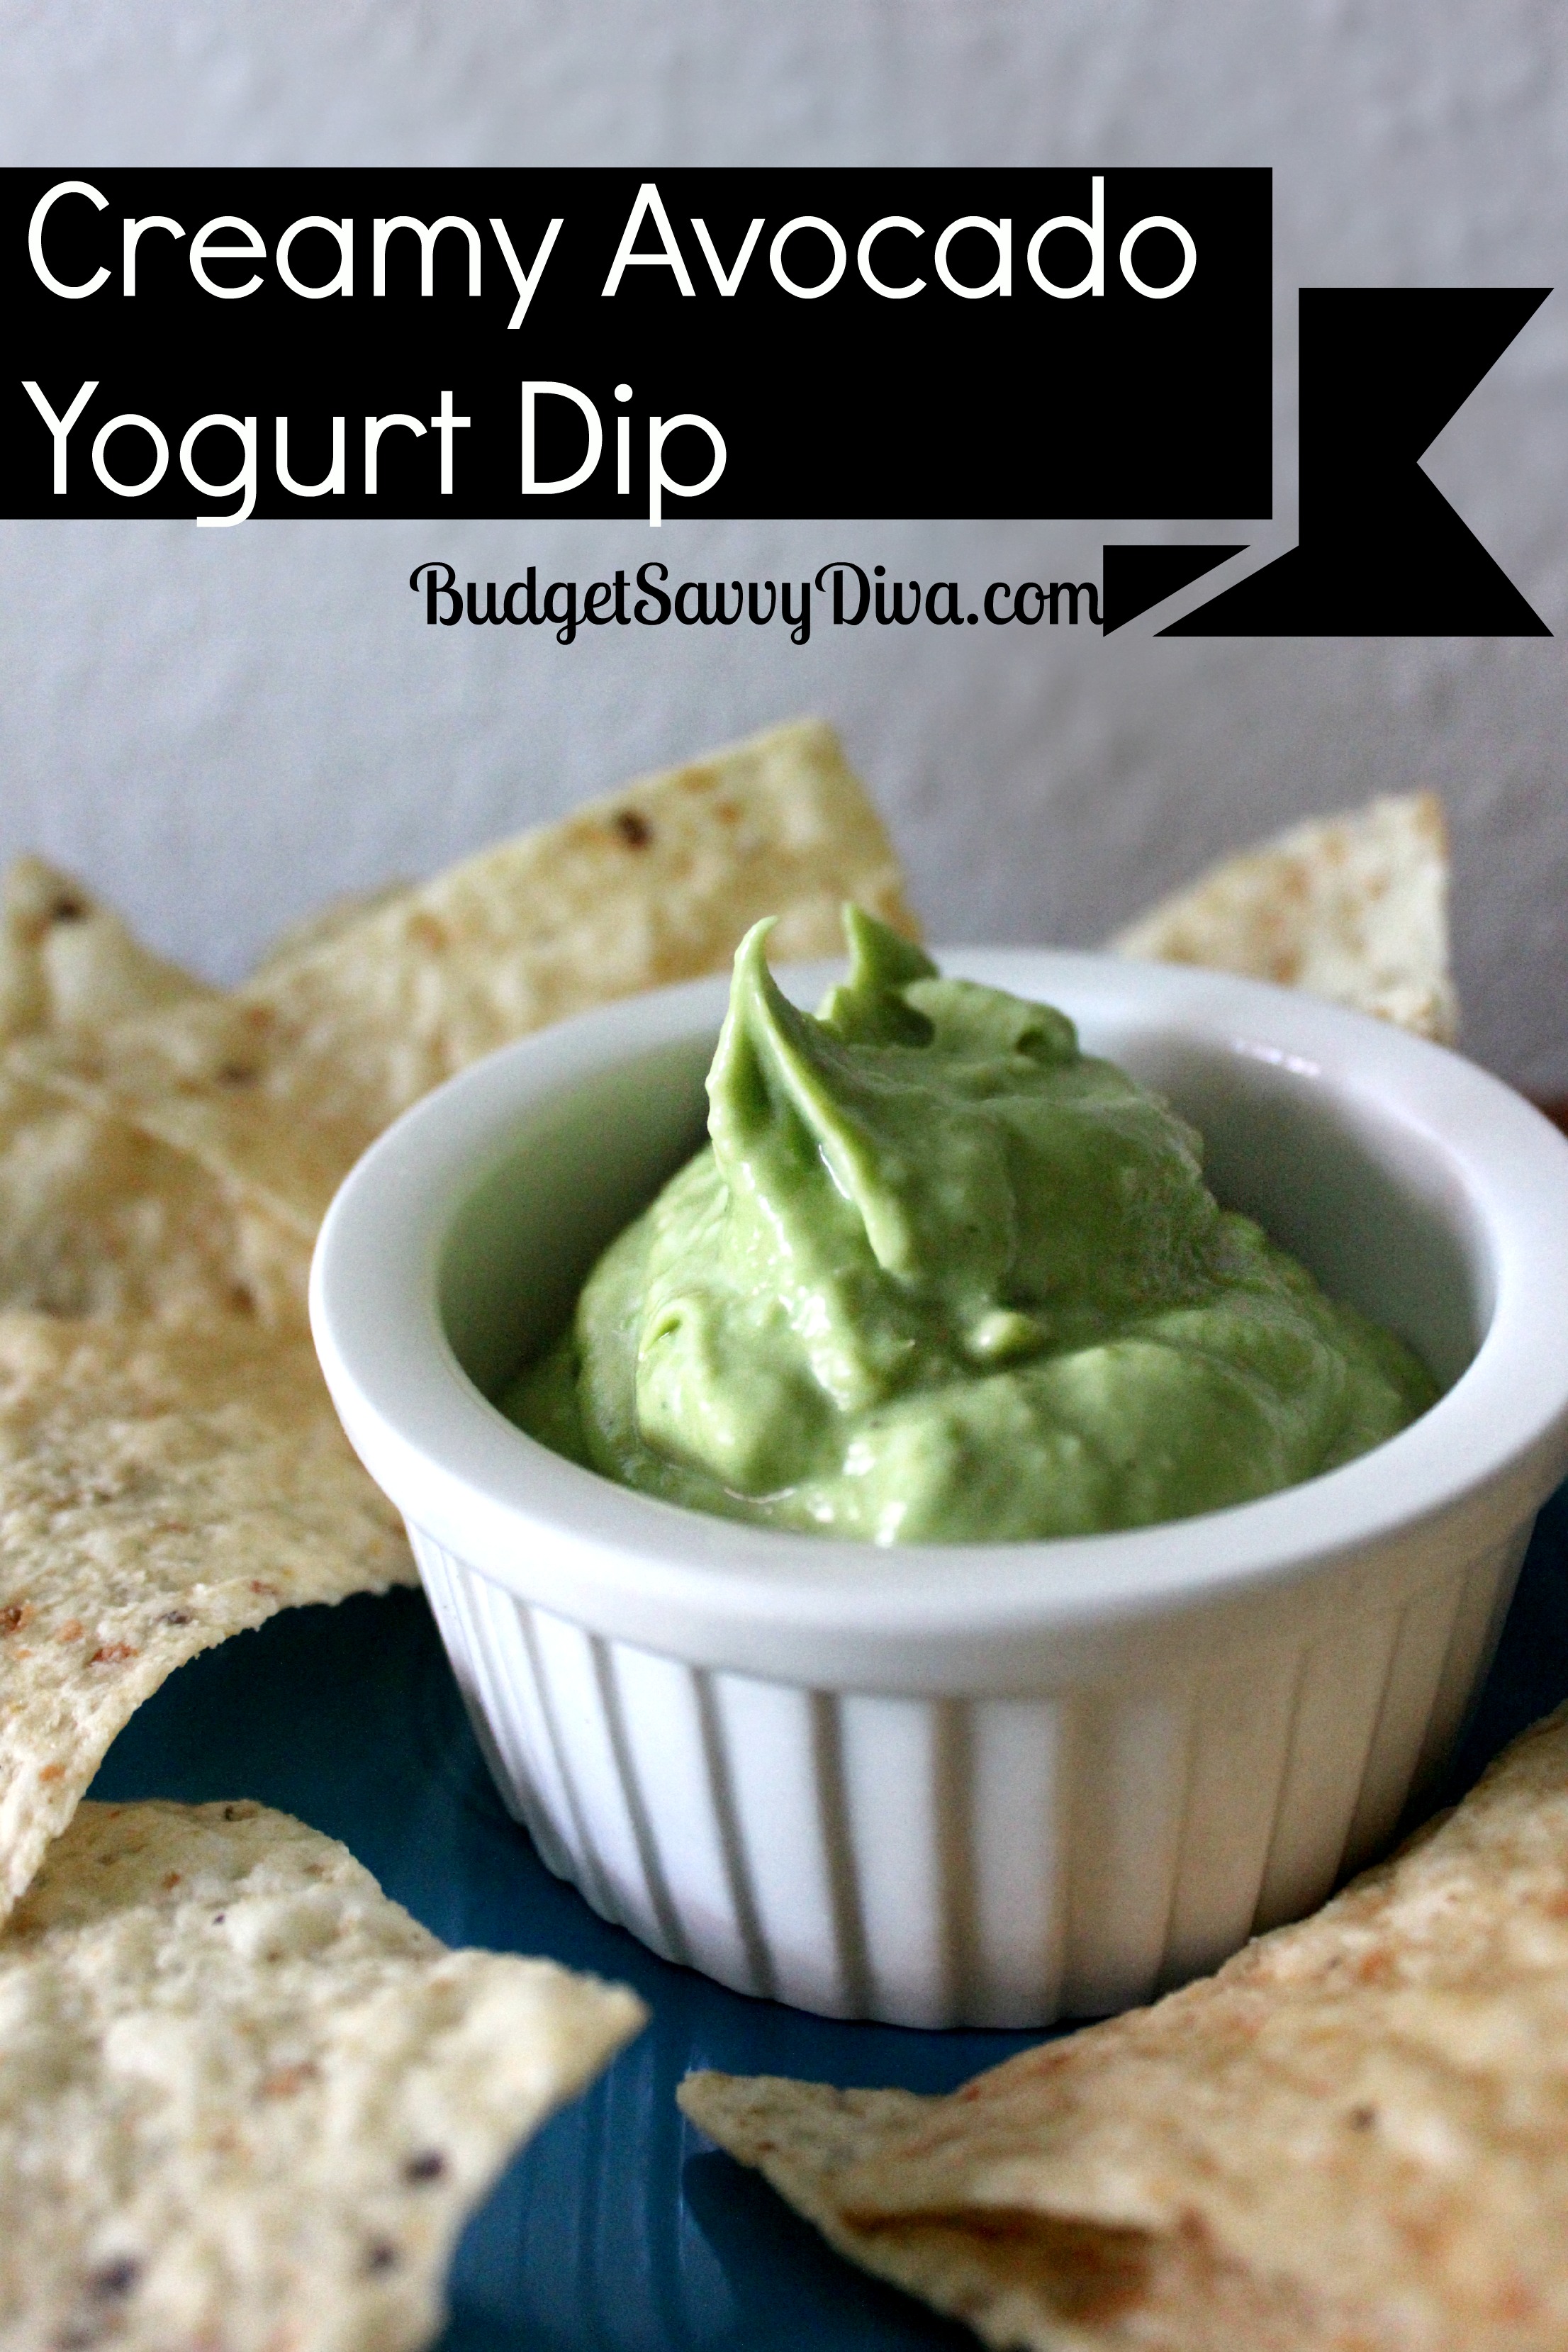 Creamy Avocado Yogurt Dip Recipe | Budget Savvy Diva